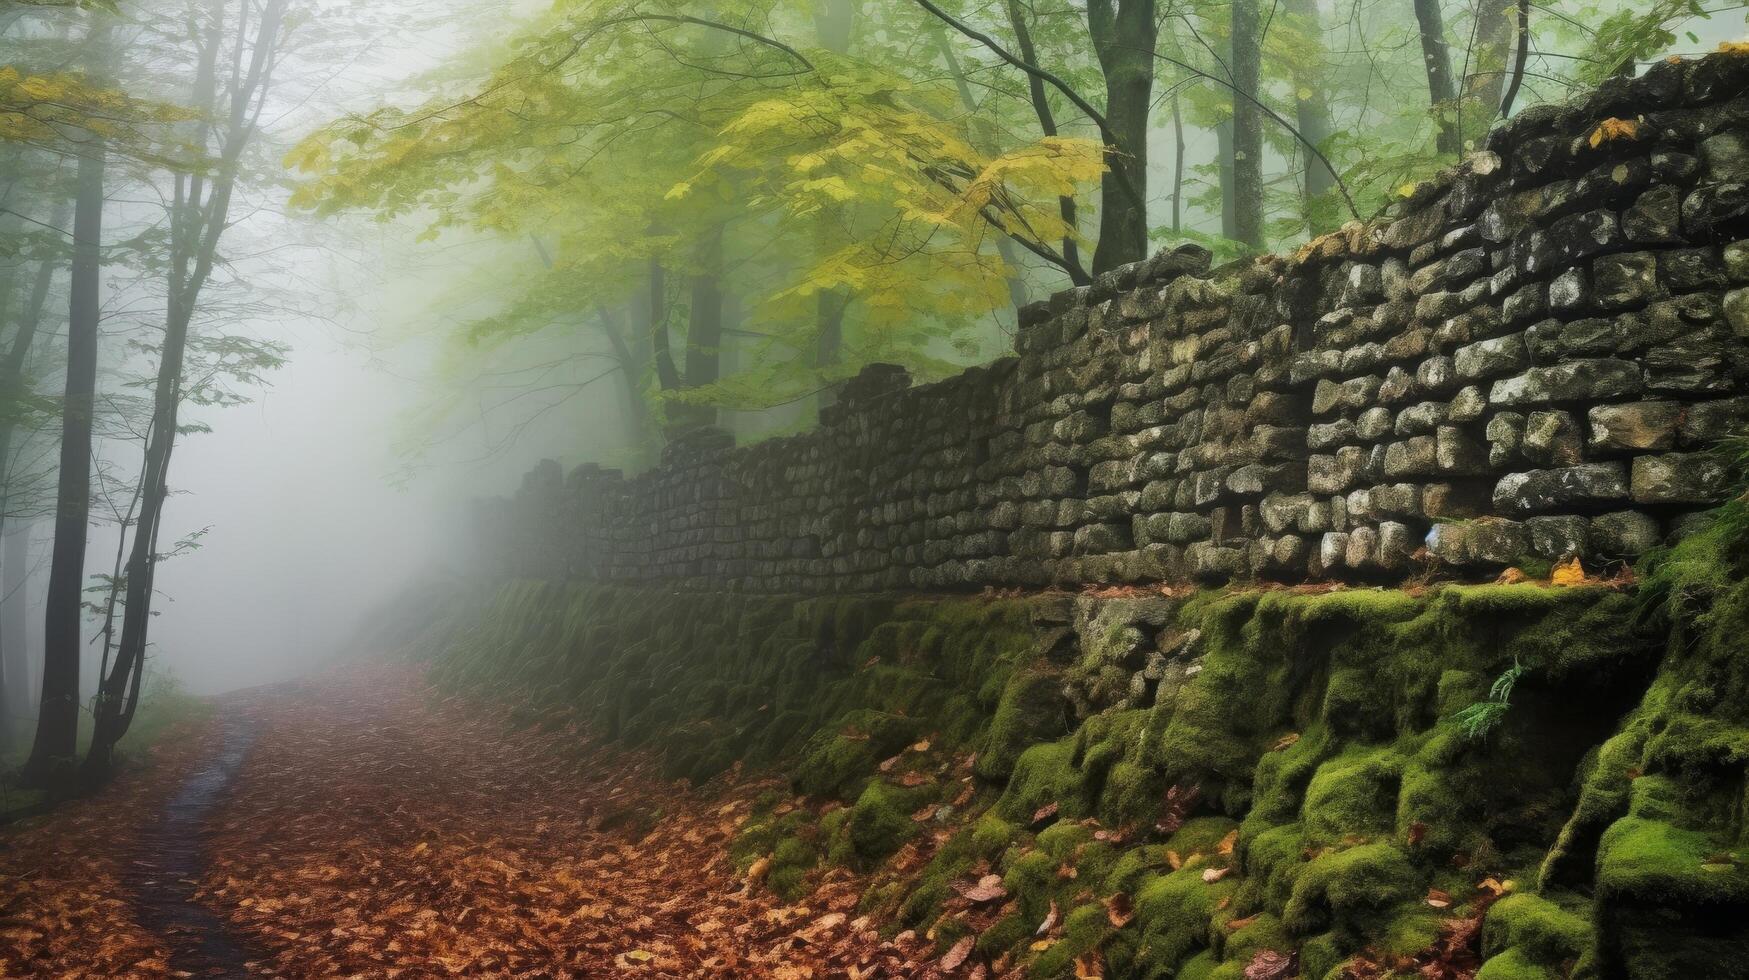 forteresse des murs dans brouillard couvert forêt photo